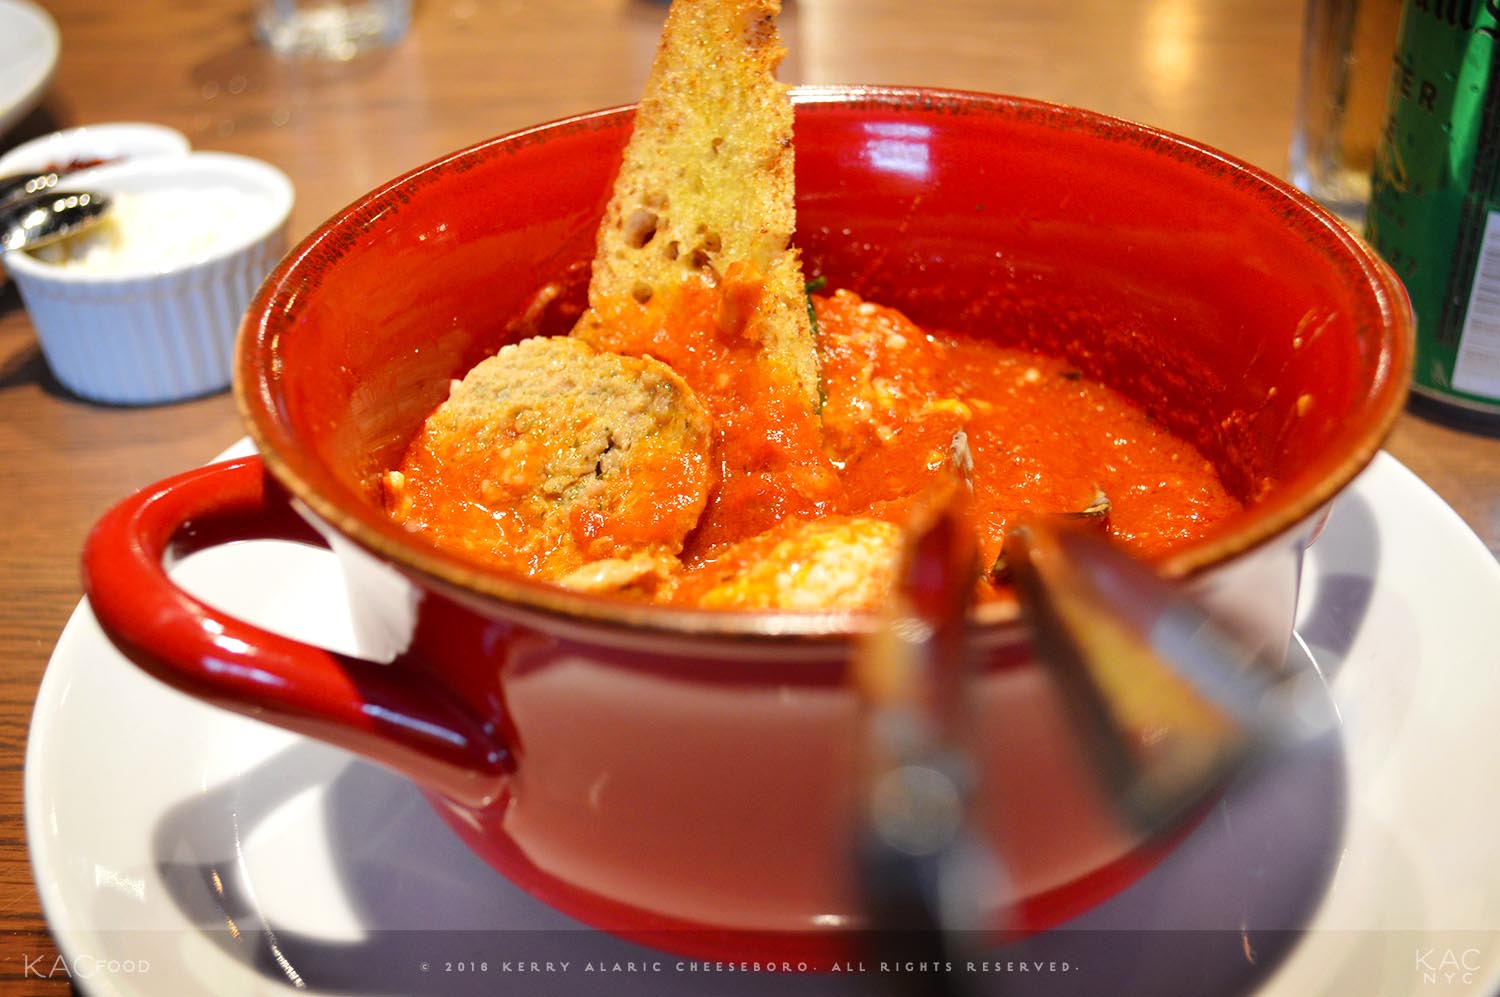 kac_food-160810-maroni-hot-pots-meatball-trio-1500.jpg